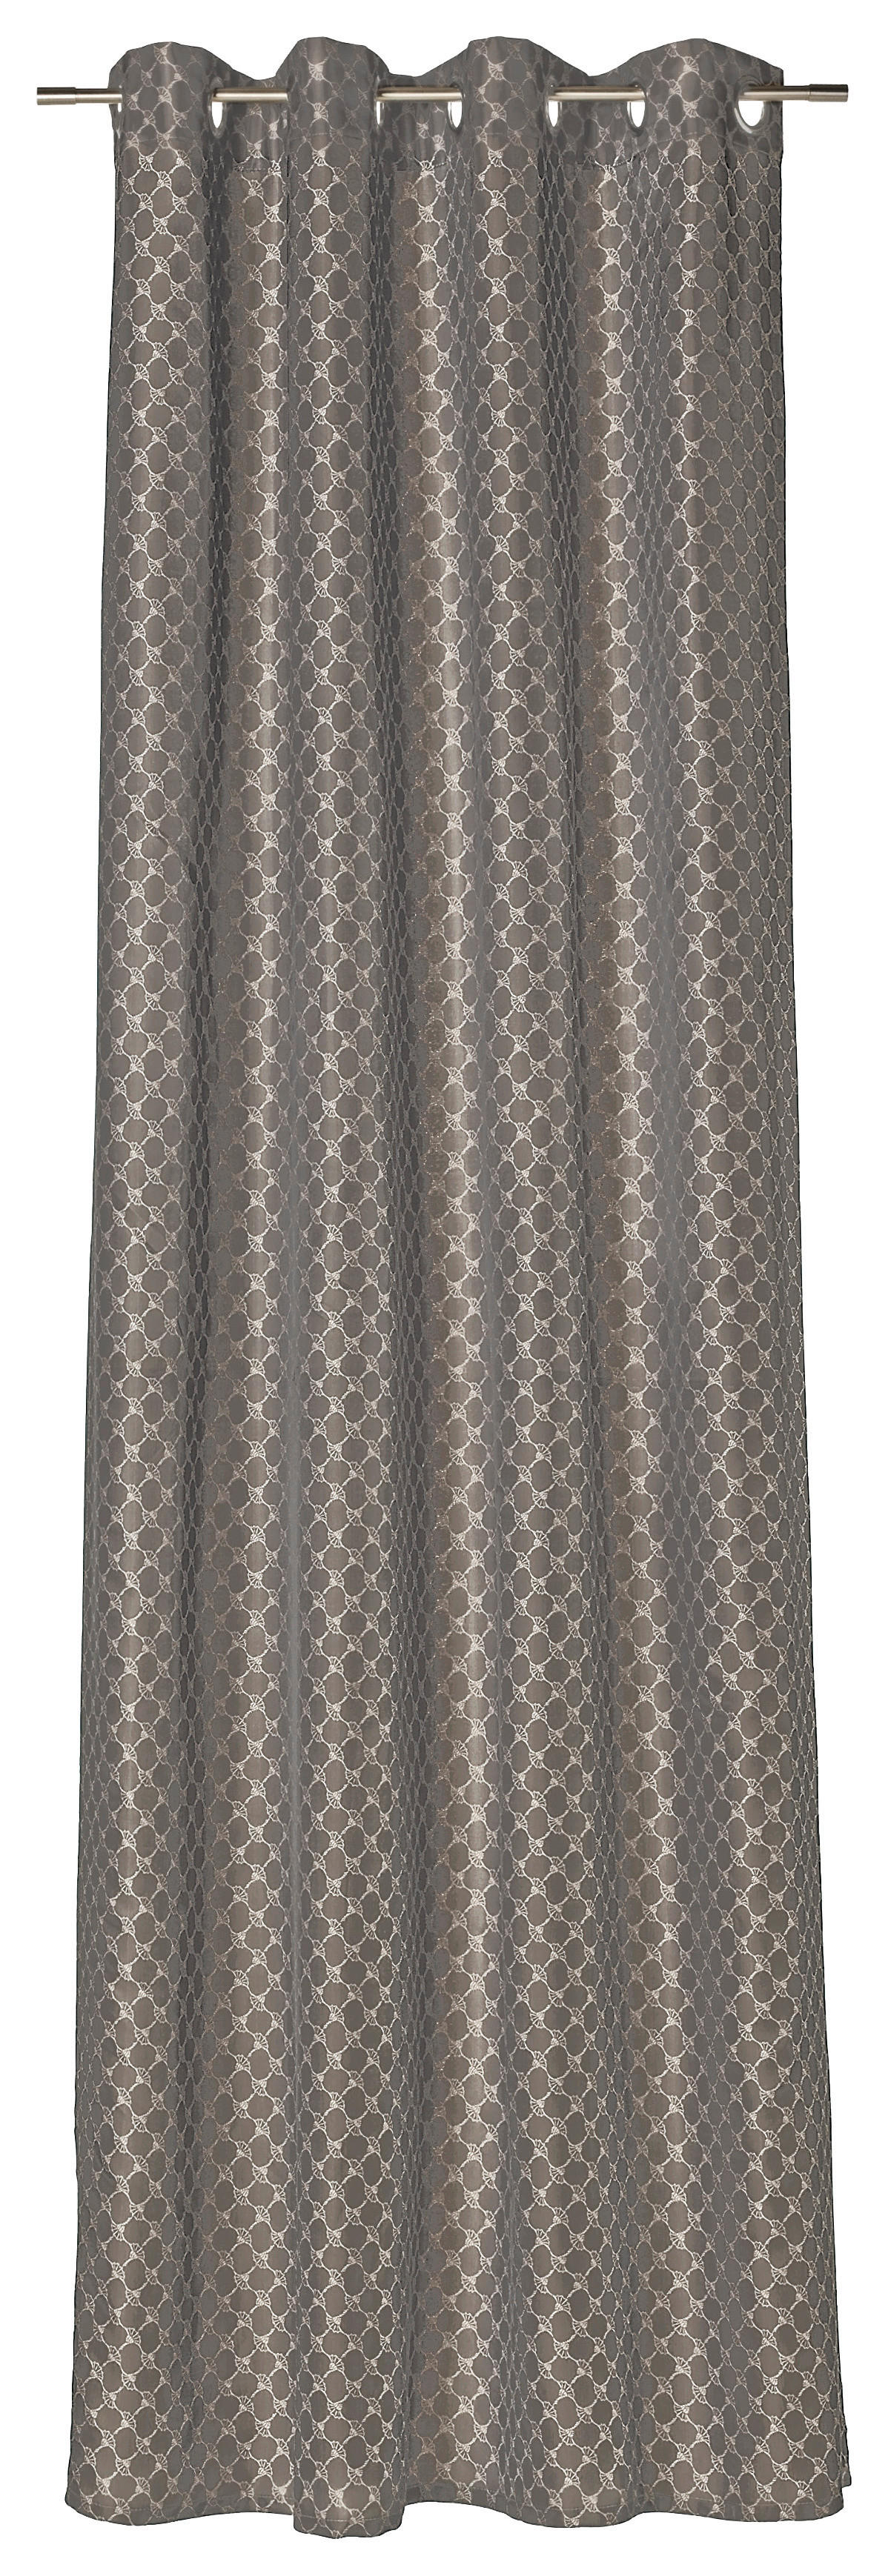 ÖSENSCHAL Allover blickdicht 140/250 cm   - Braun/Grau, Design, Textil (140/250cm) - Joop!